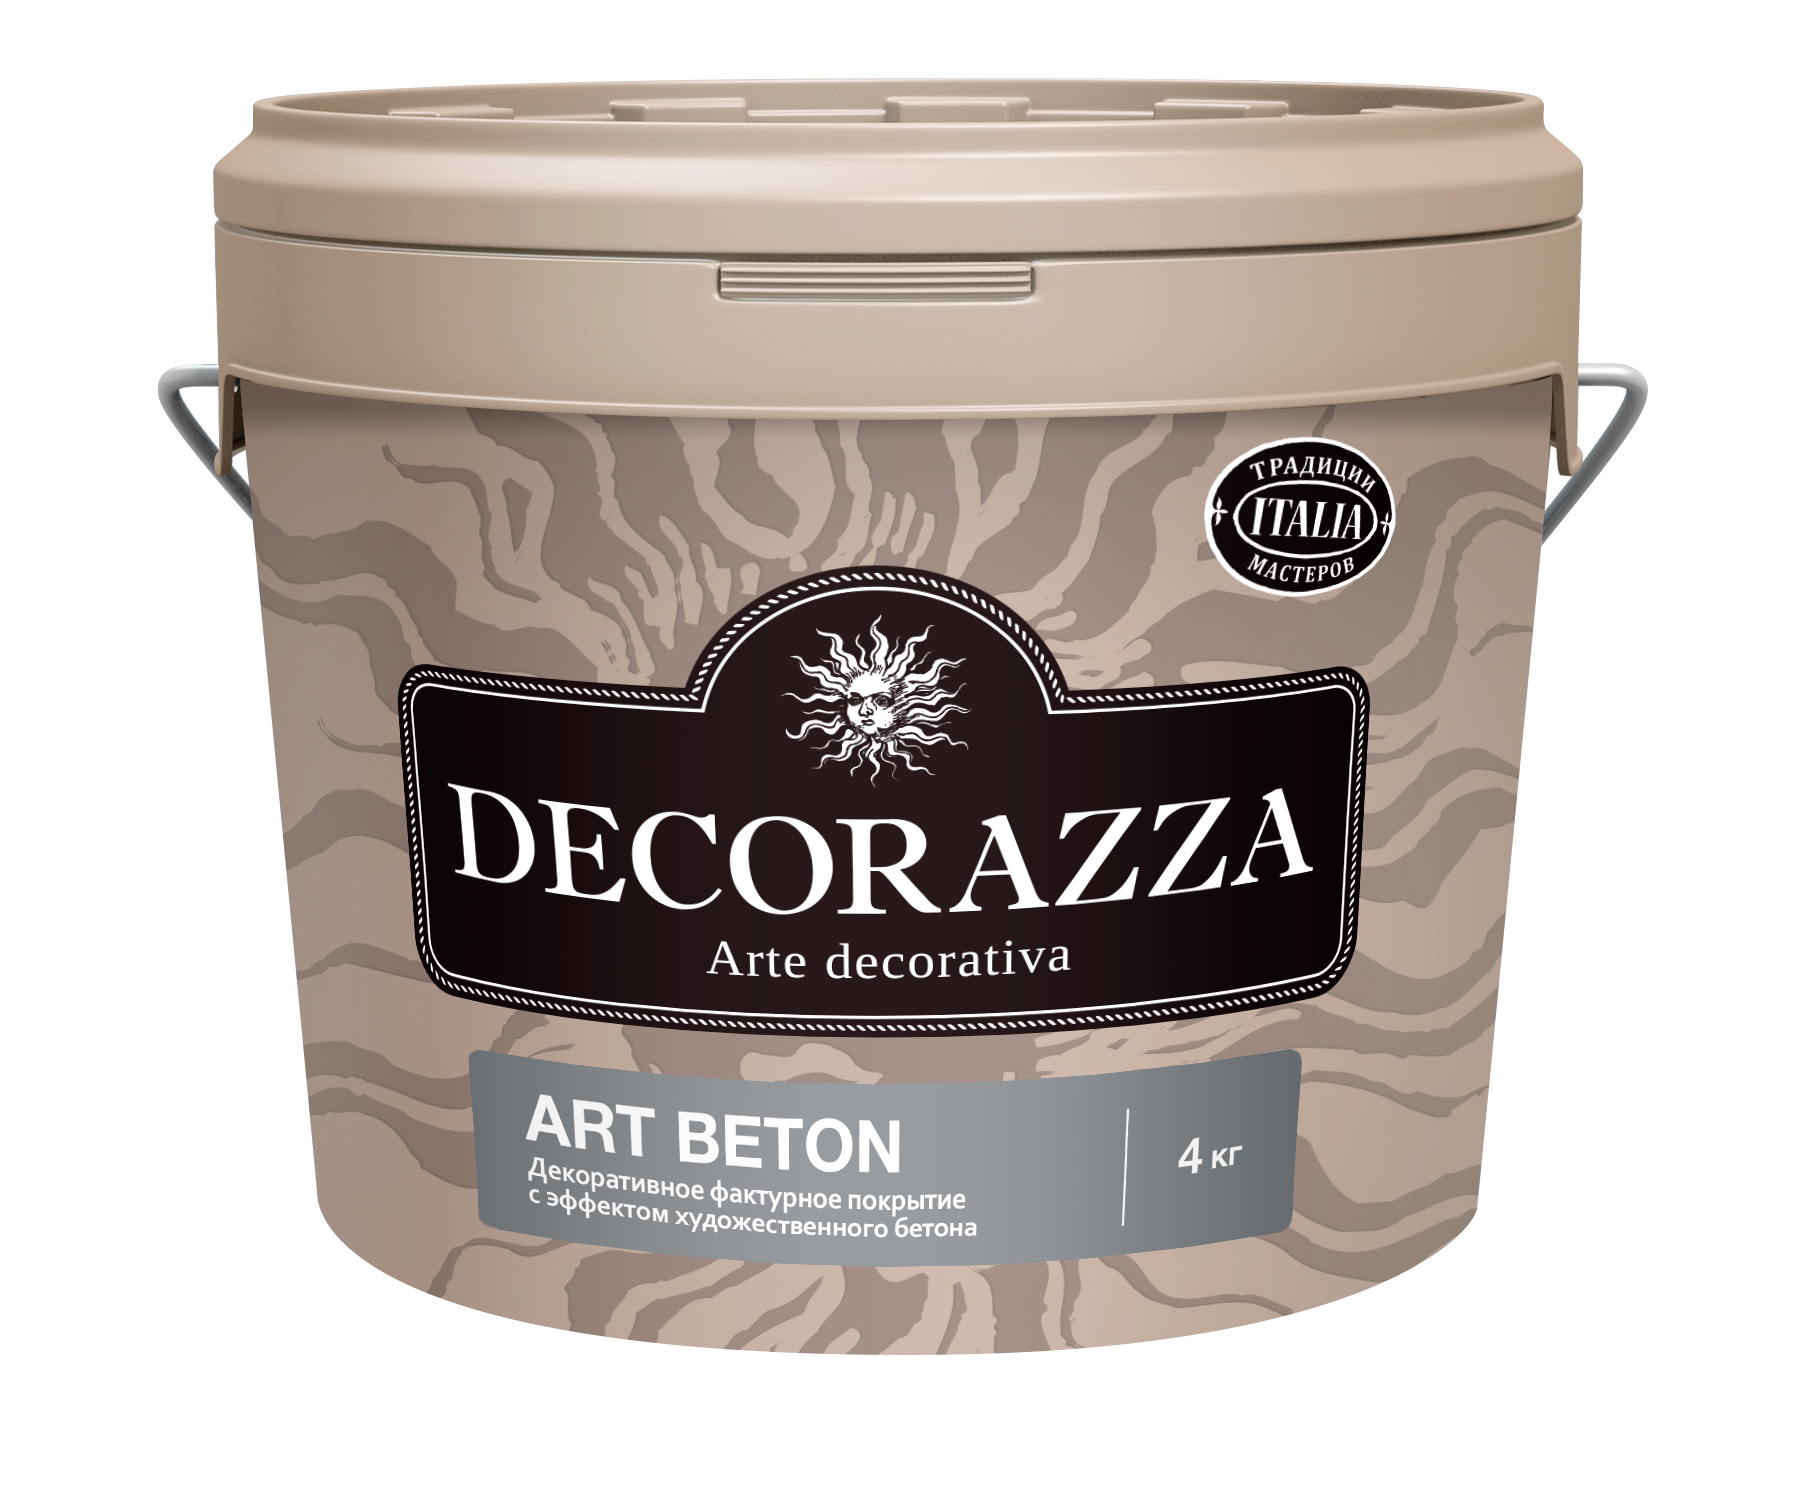 Краска Decorazza Art beton 001 декоративная, 4 кг